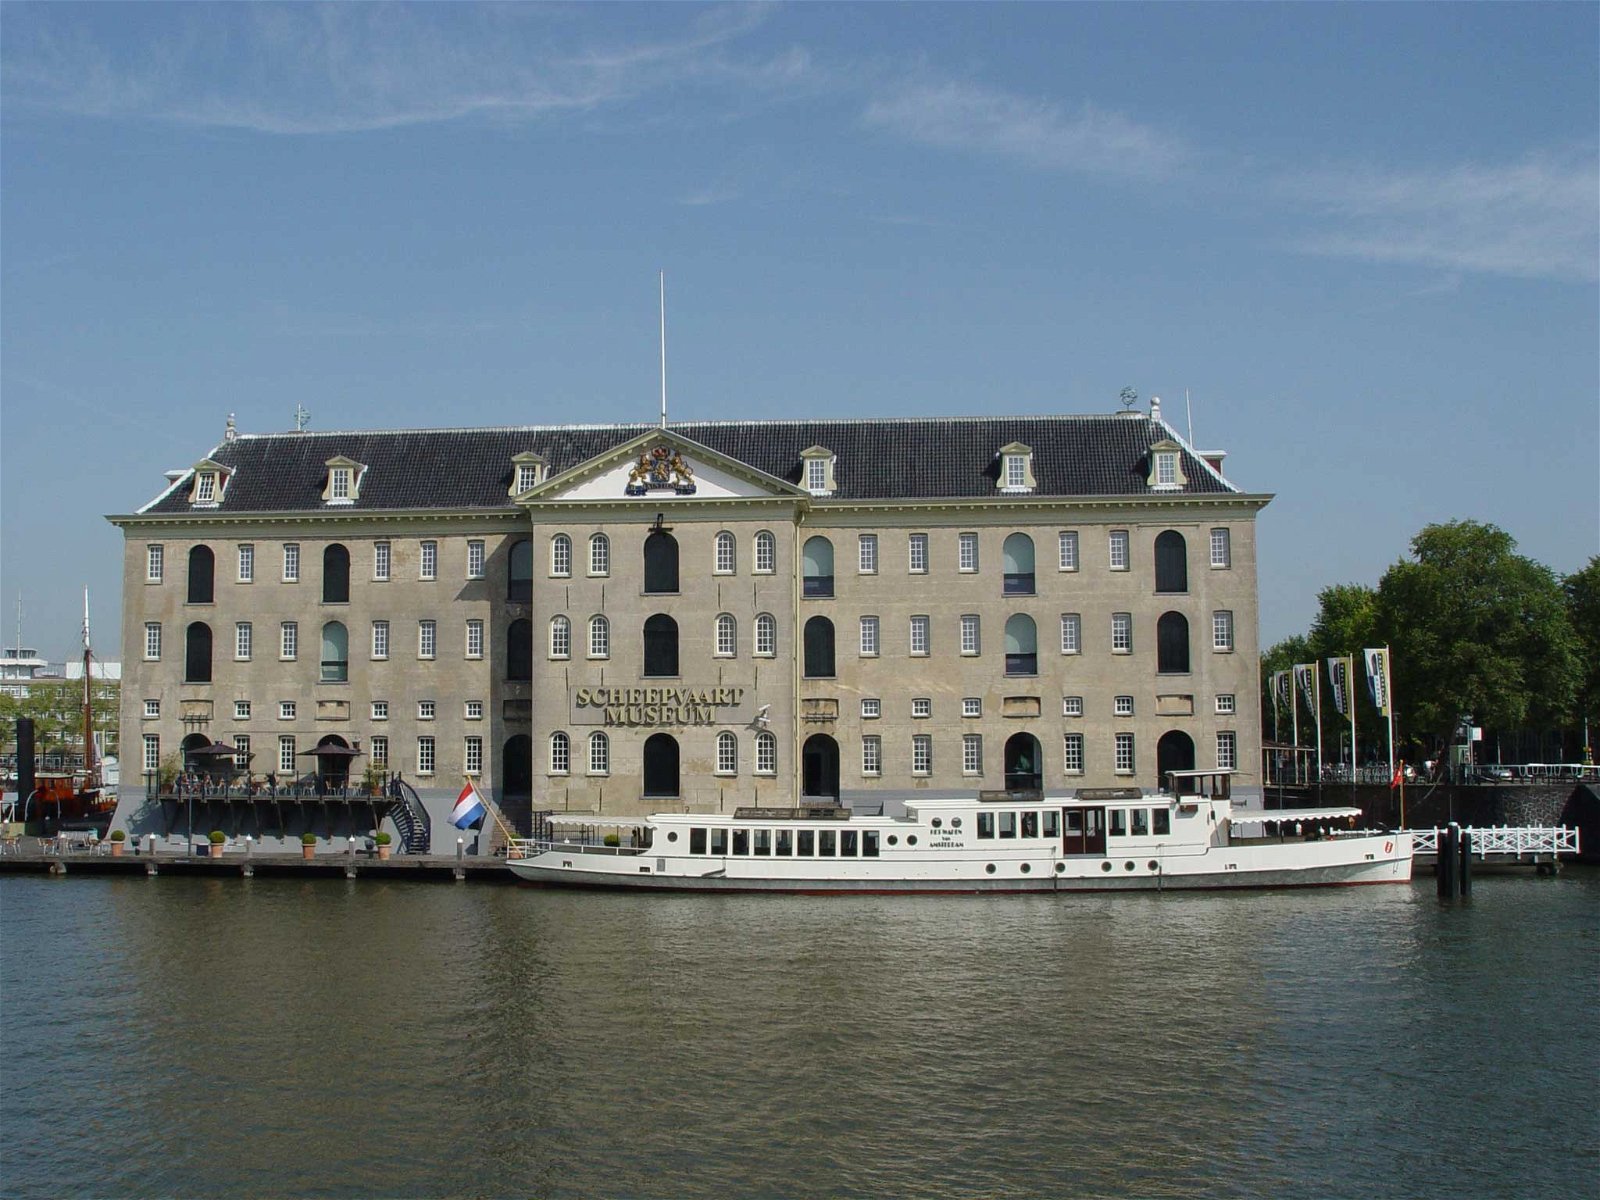 IJ boat Wapen van Amsterdam